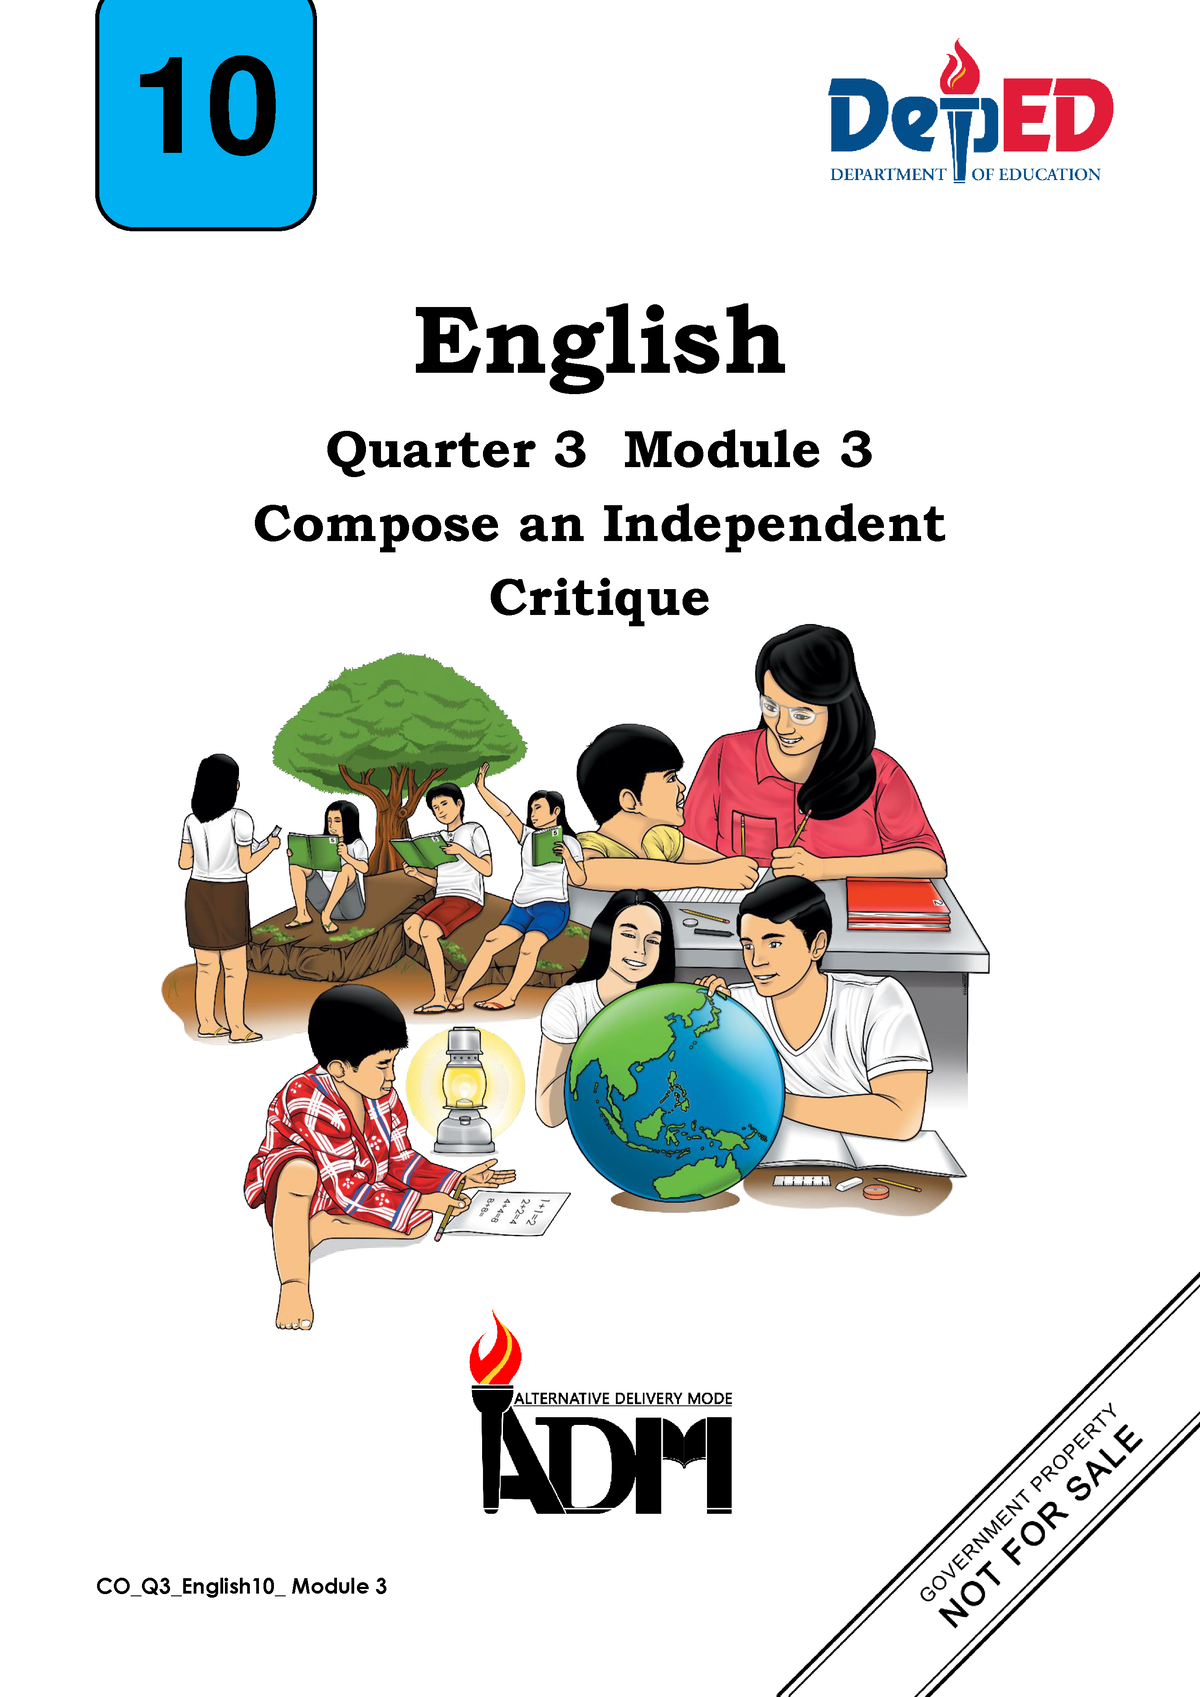 English 10 Q3 Mod 3 Final English Quarter 3 Module 3 Compose An Independent Critique 10 5954